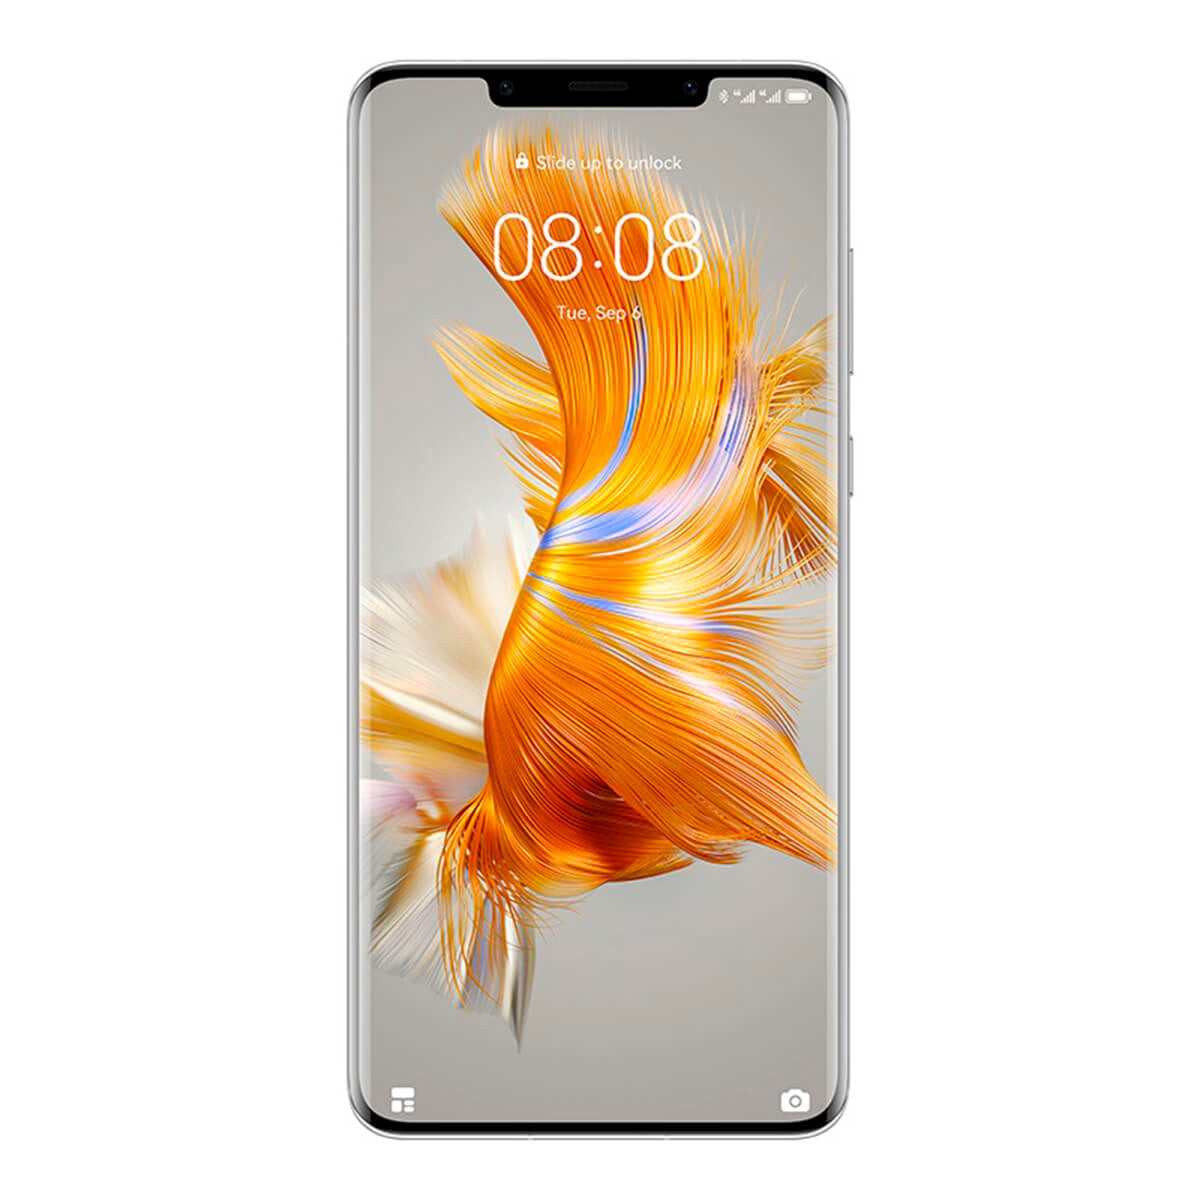 Huawei Mate 50 Pro 8GB/256GB Silver (Silver) Dual SIM DCO-LX9 Smartphone | Huawei